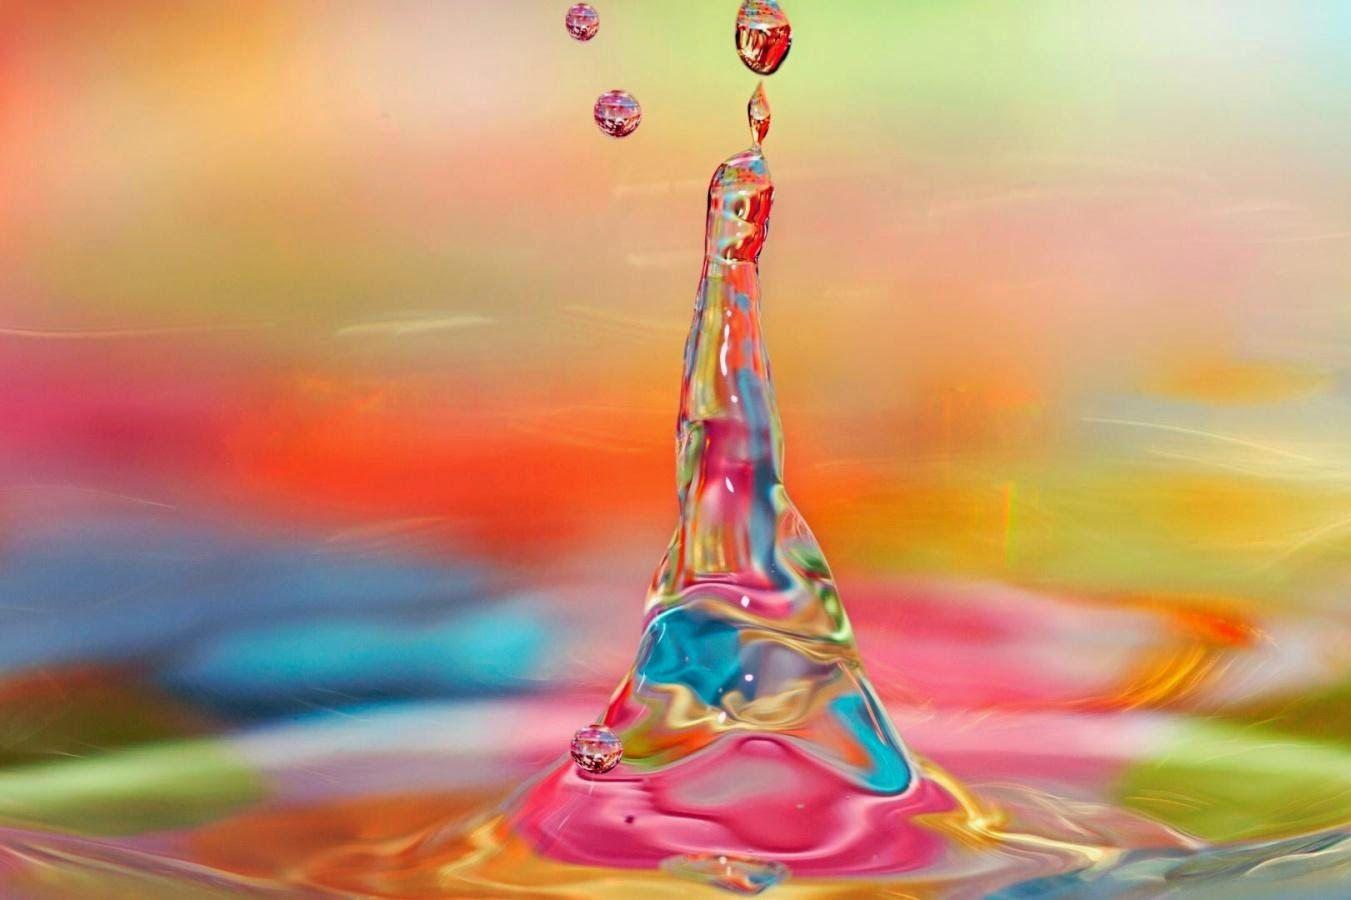 Free Download HD Wallpaper: 3D Colorful Water Drop Free Wallpaper